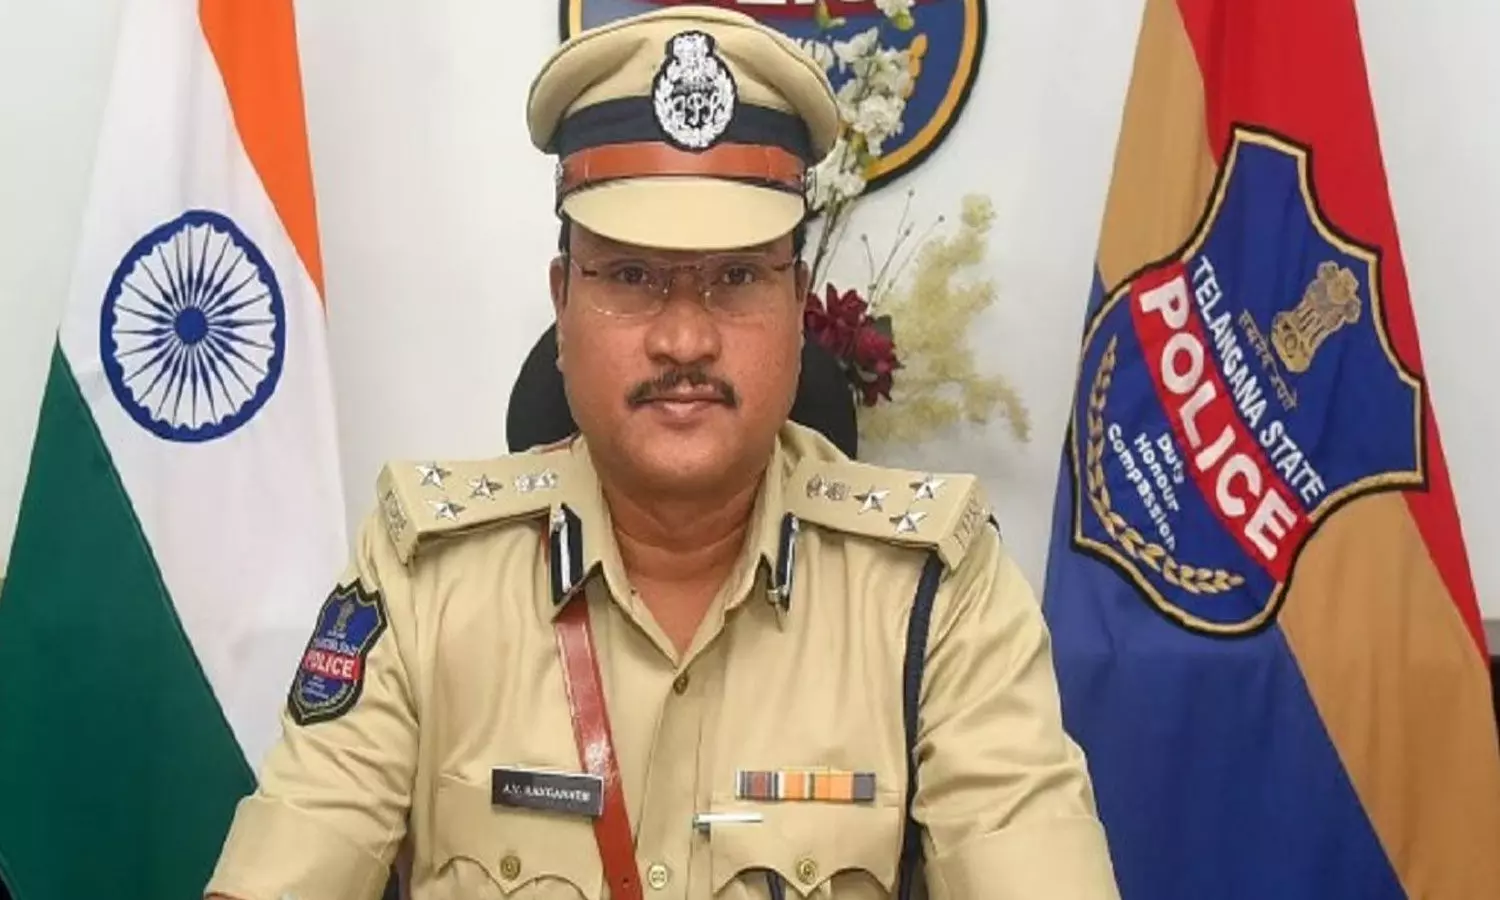 Warangal Police Commissioner A V Ranganath